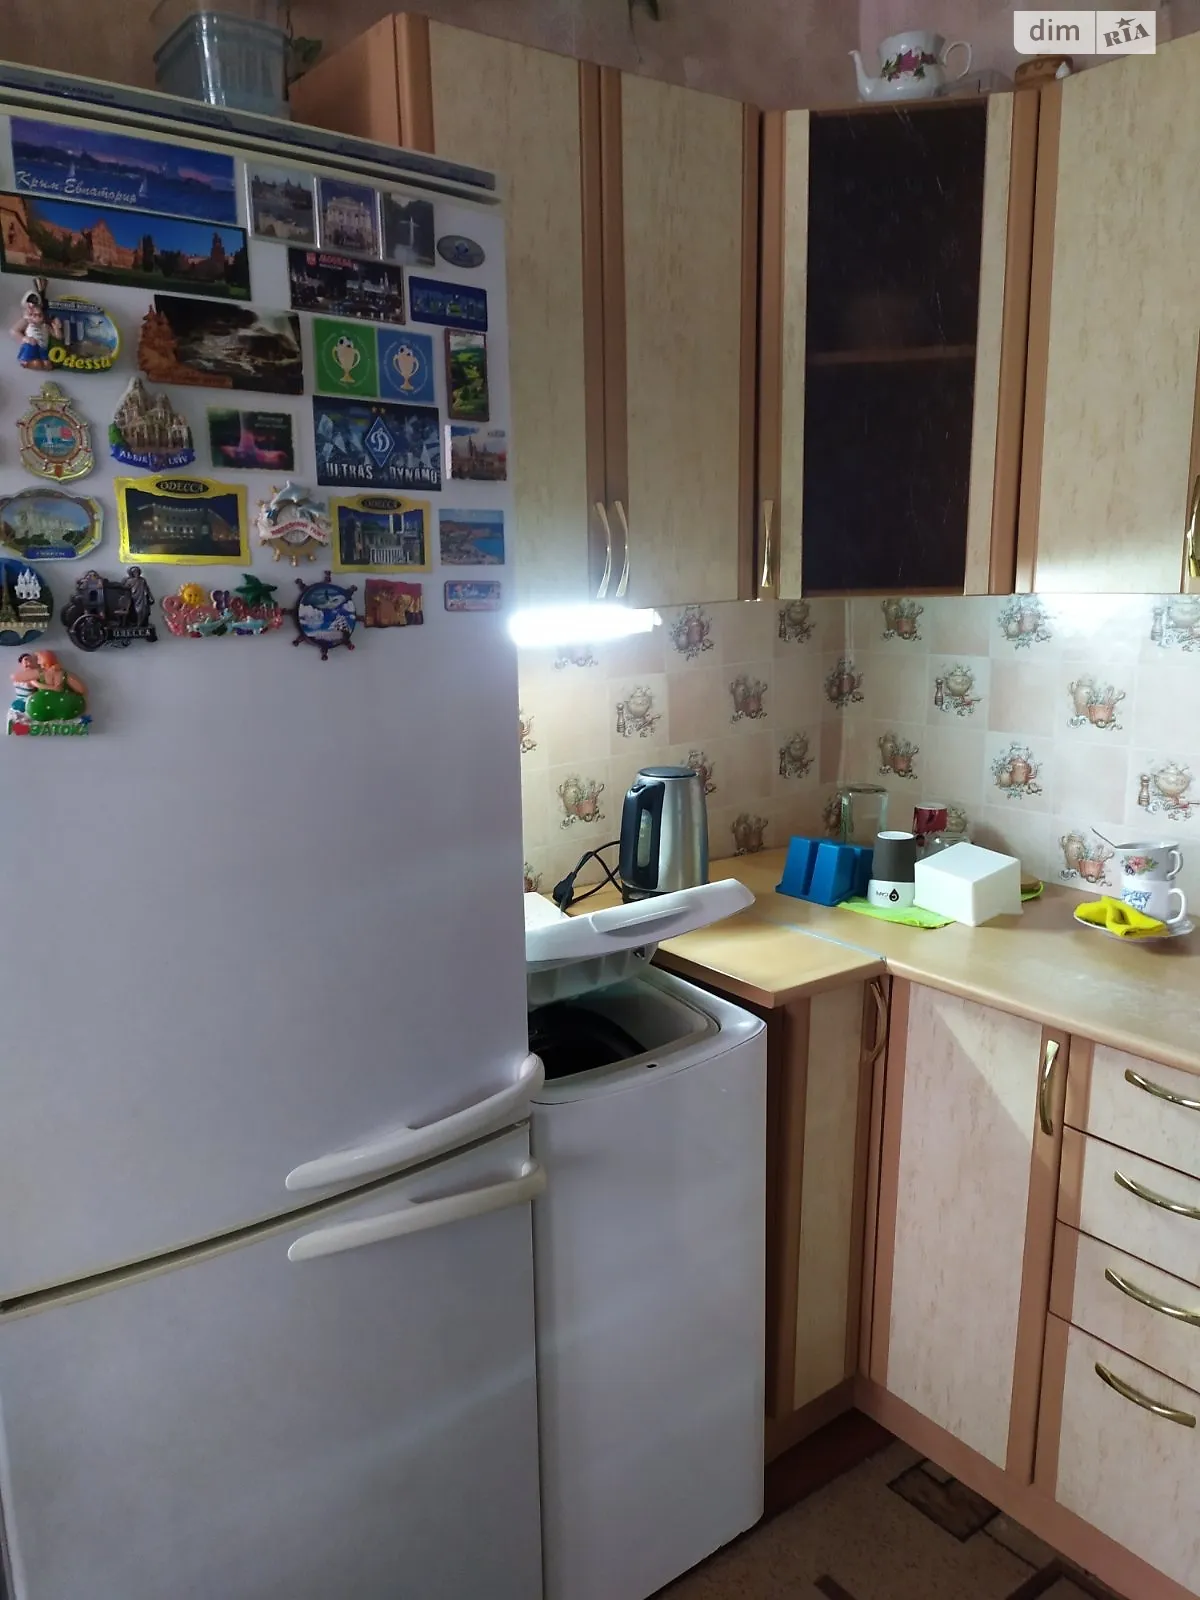 Продается комната 20 кв. м в Киеве, цена: 20000 $ - фото 1